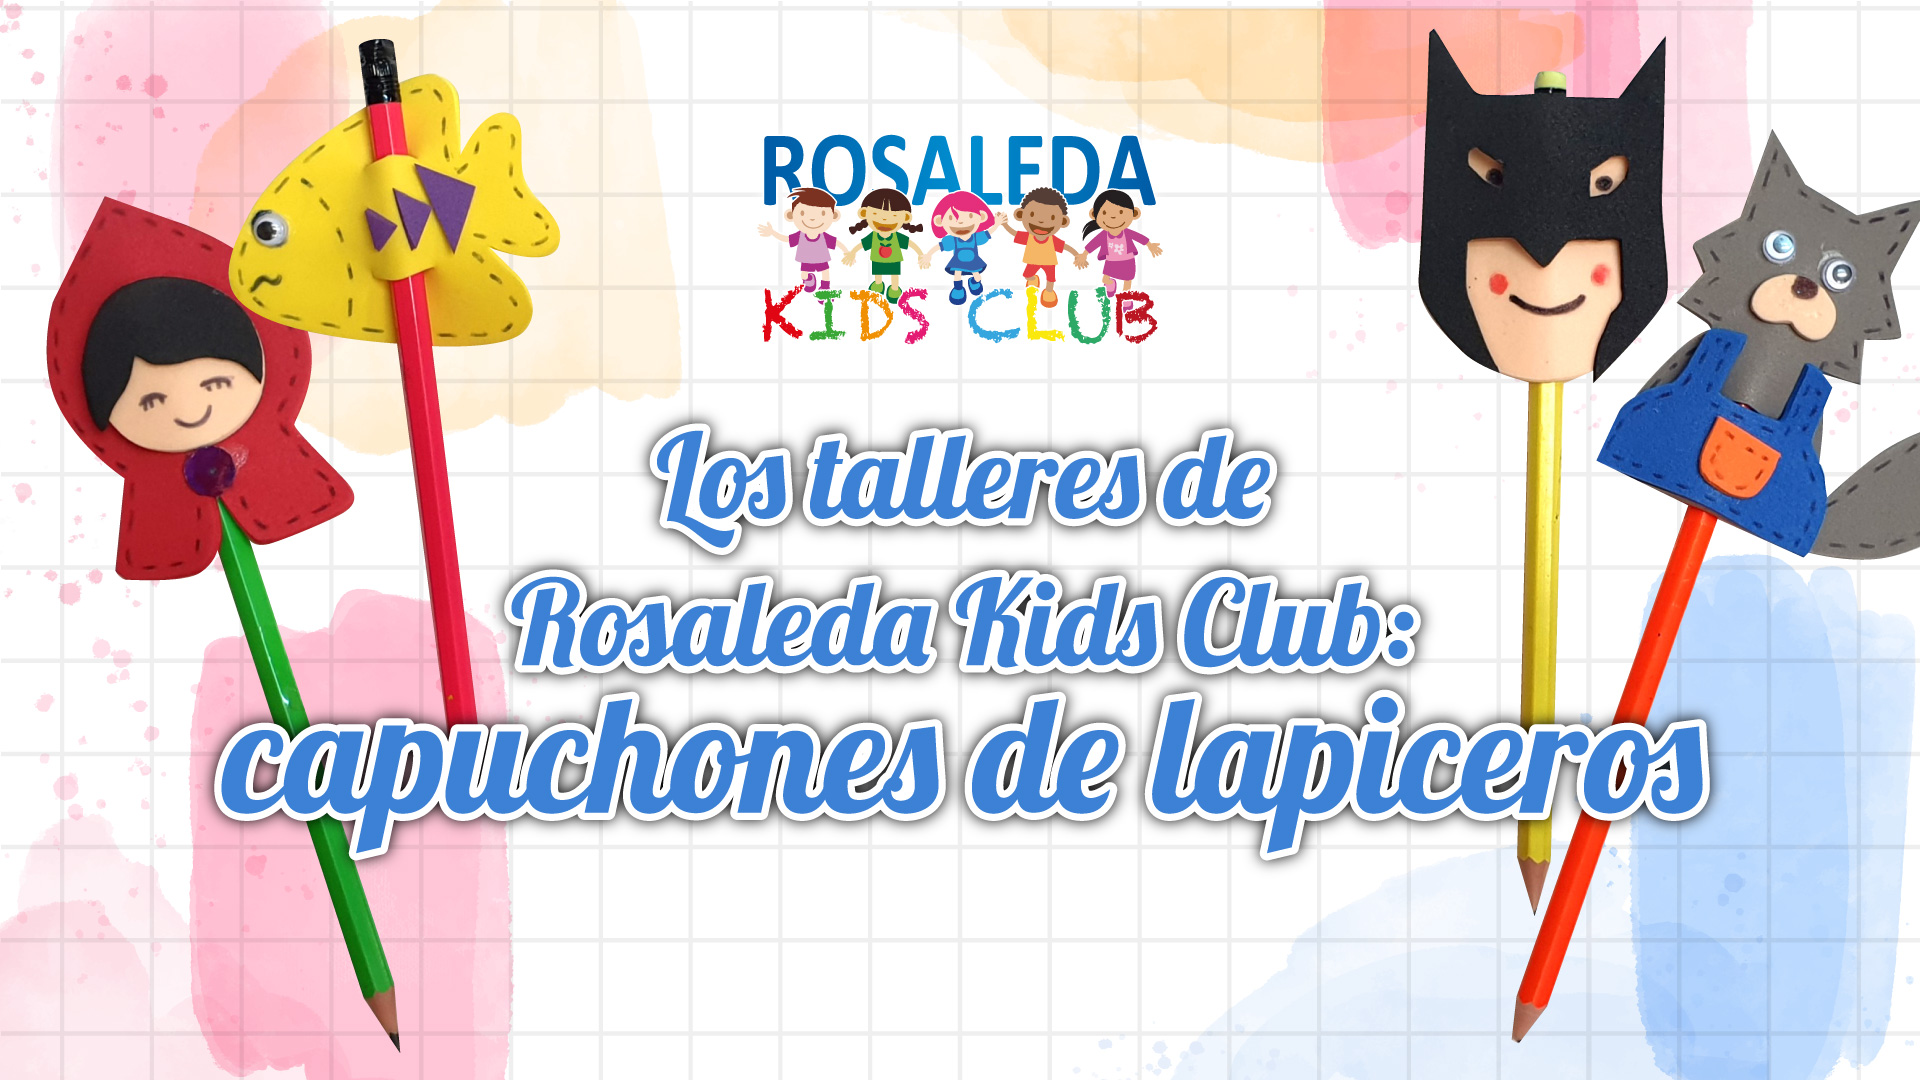 Los talleres de Rosaleda Kids Club: capuchones de lapiceros